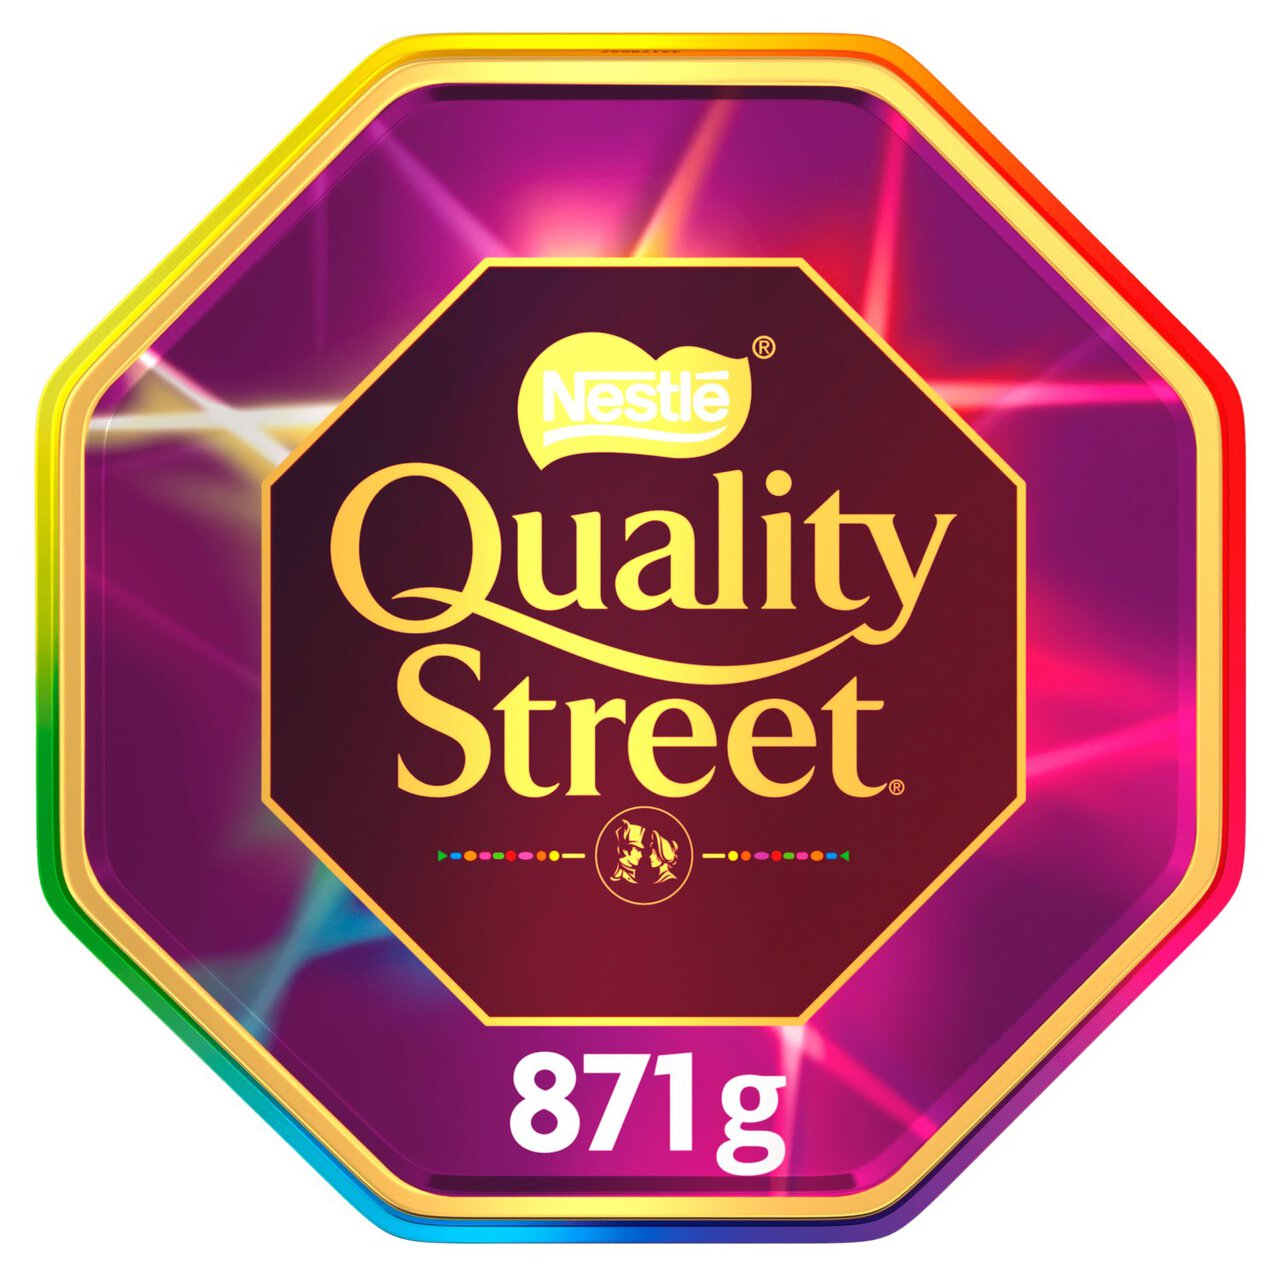 Quality Street Large Tin 871g